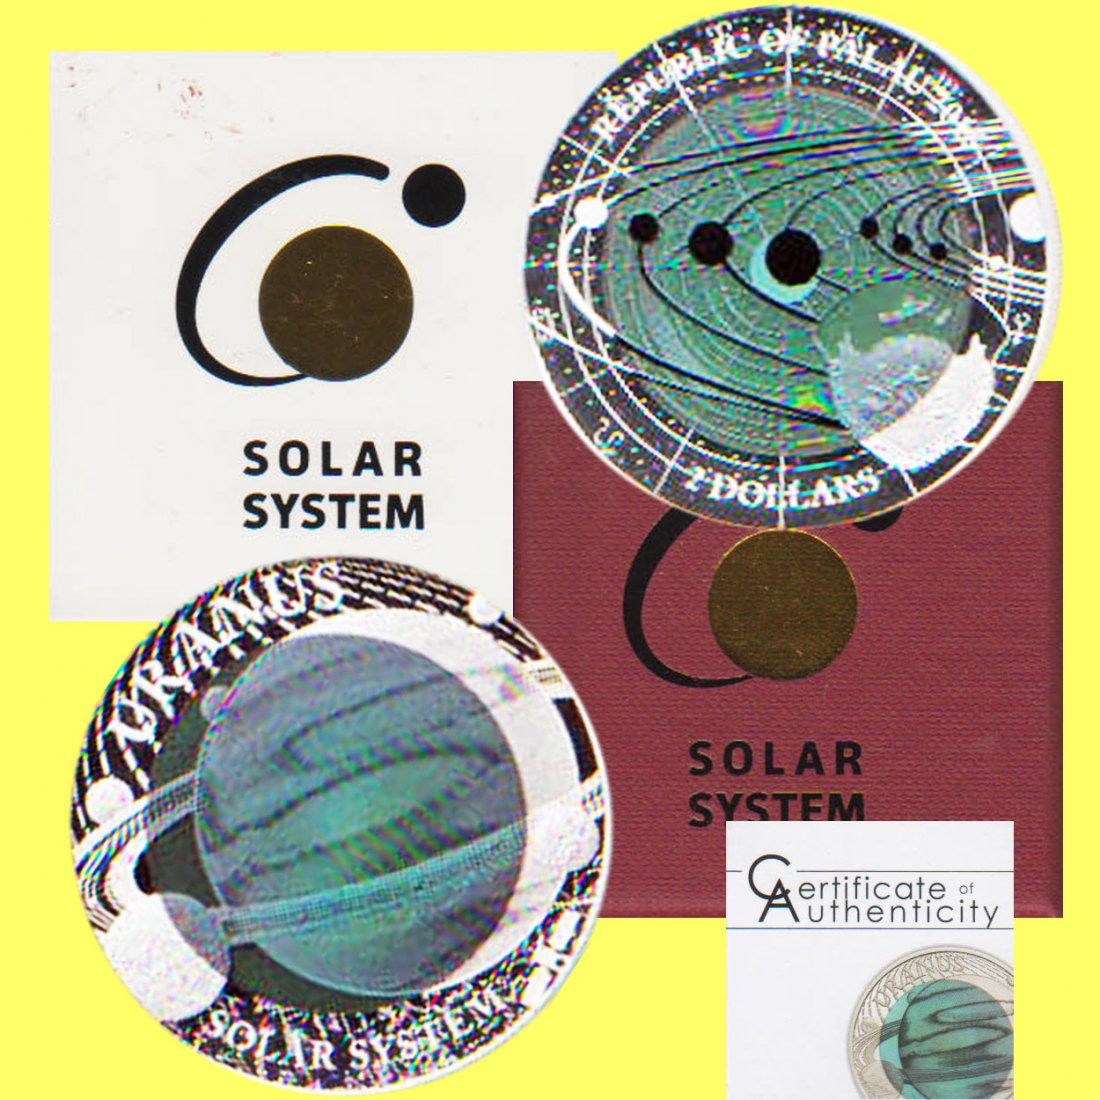  Offiz. 2-Dollars-Silber-Niob-Münze Palau *Sonnensystem - Uranus* 2018 *PP* nur 3.000St!   